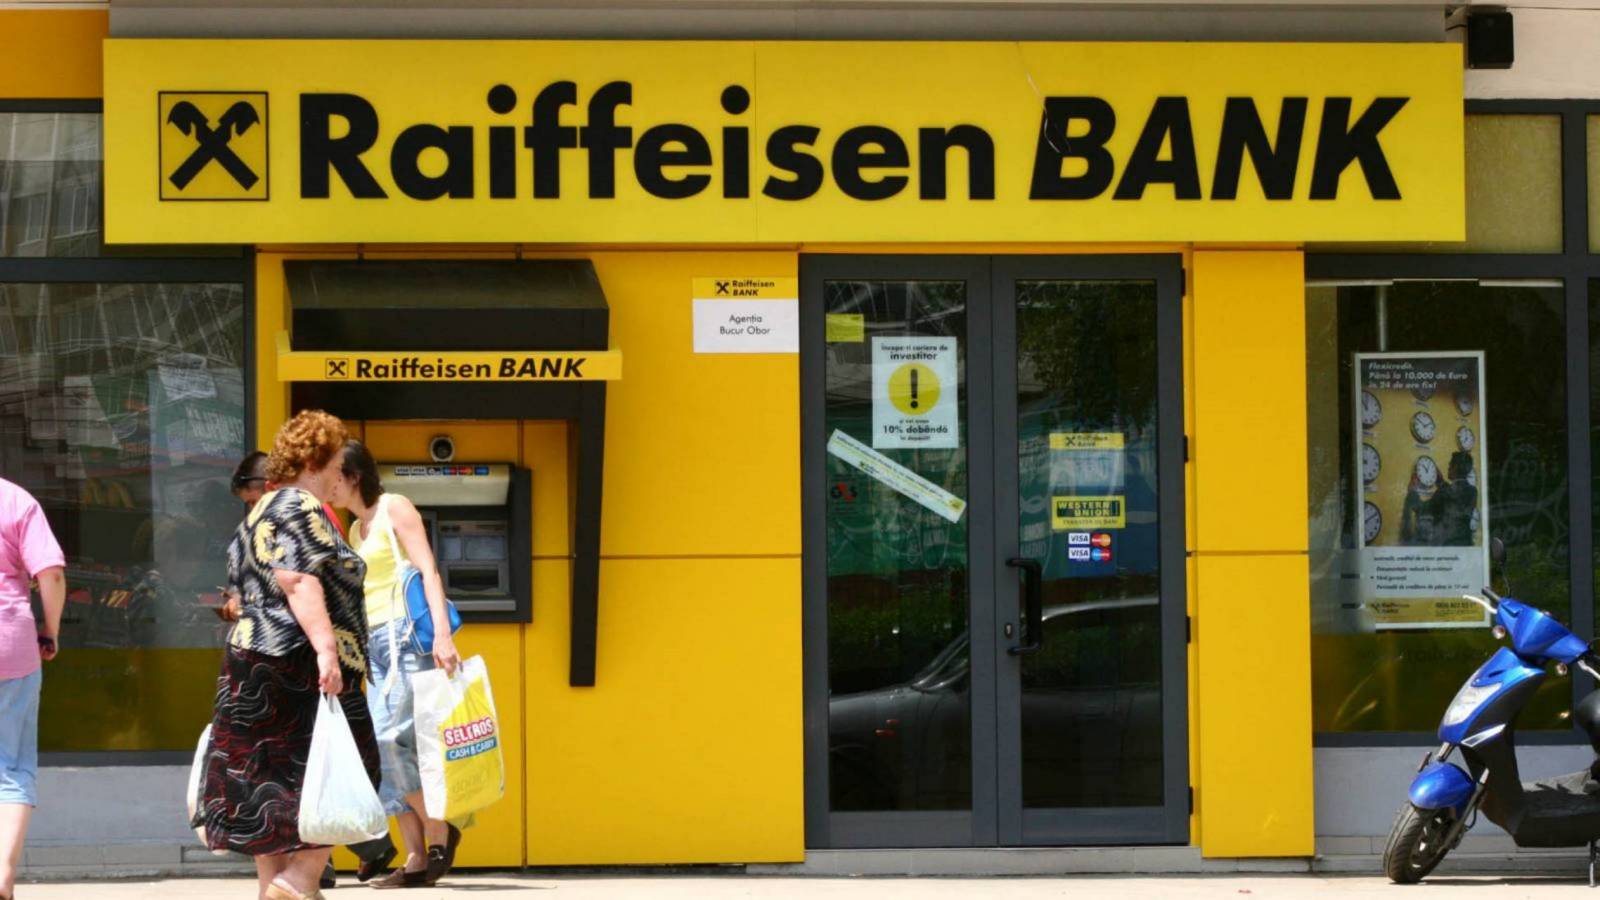 Raiffeisen Bank funds